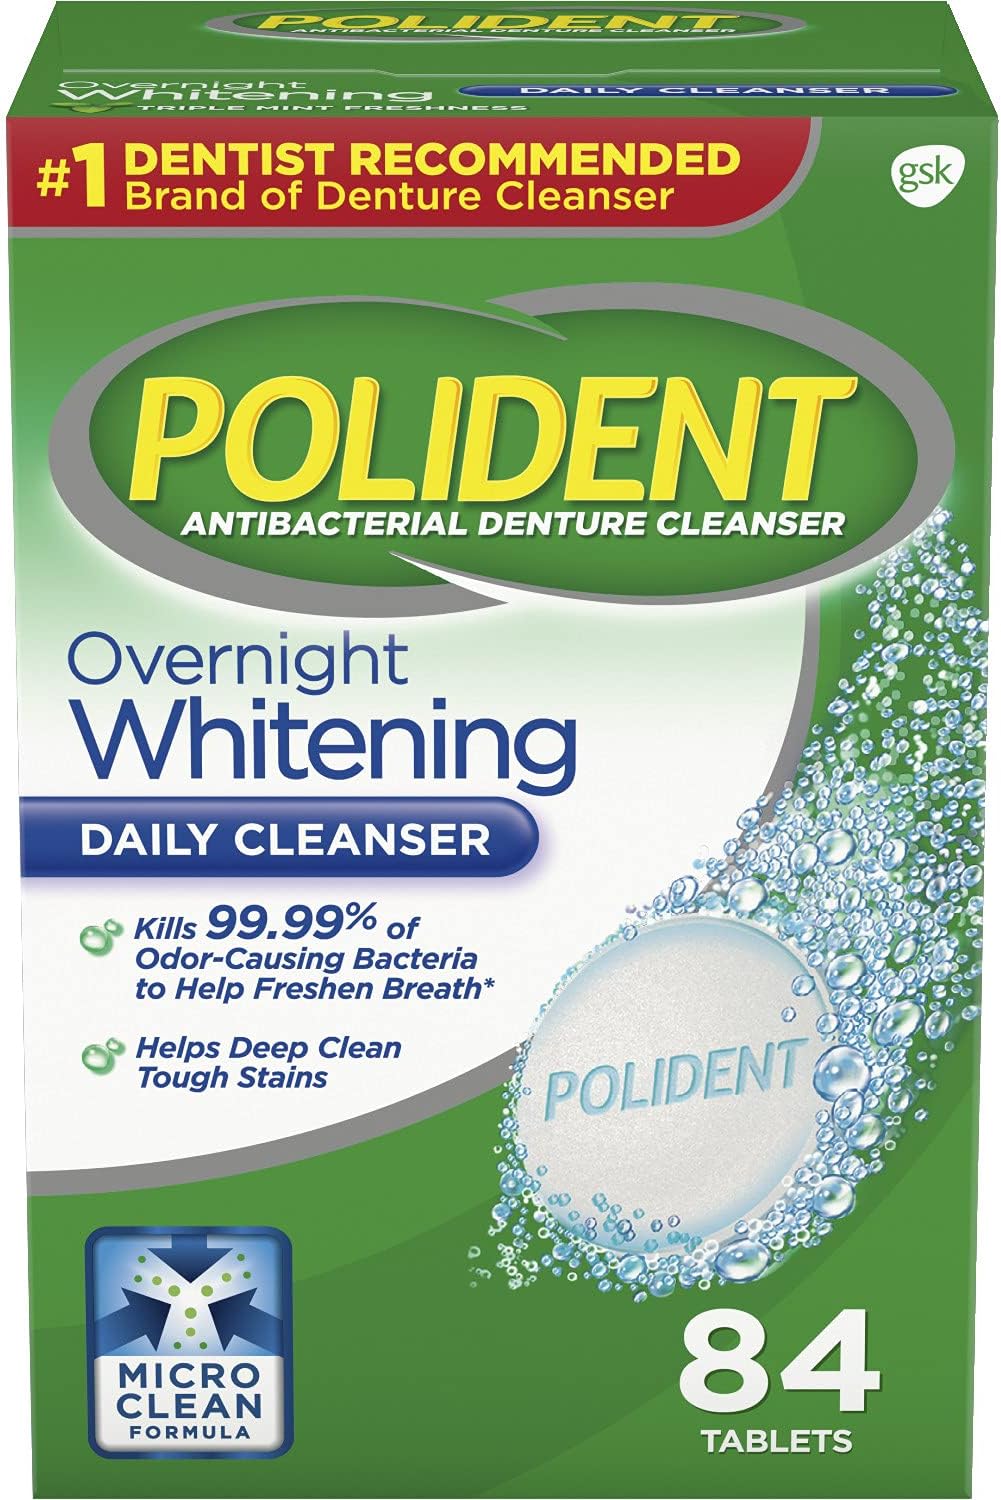 Polident Denture Cleaner Overnight Whitening Tablets, 84 ct.